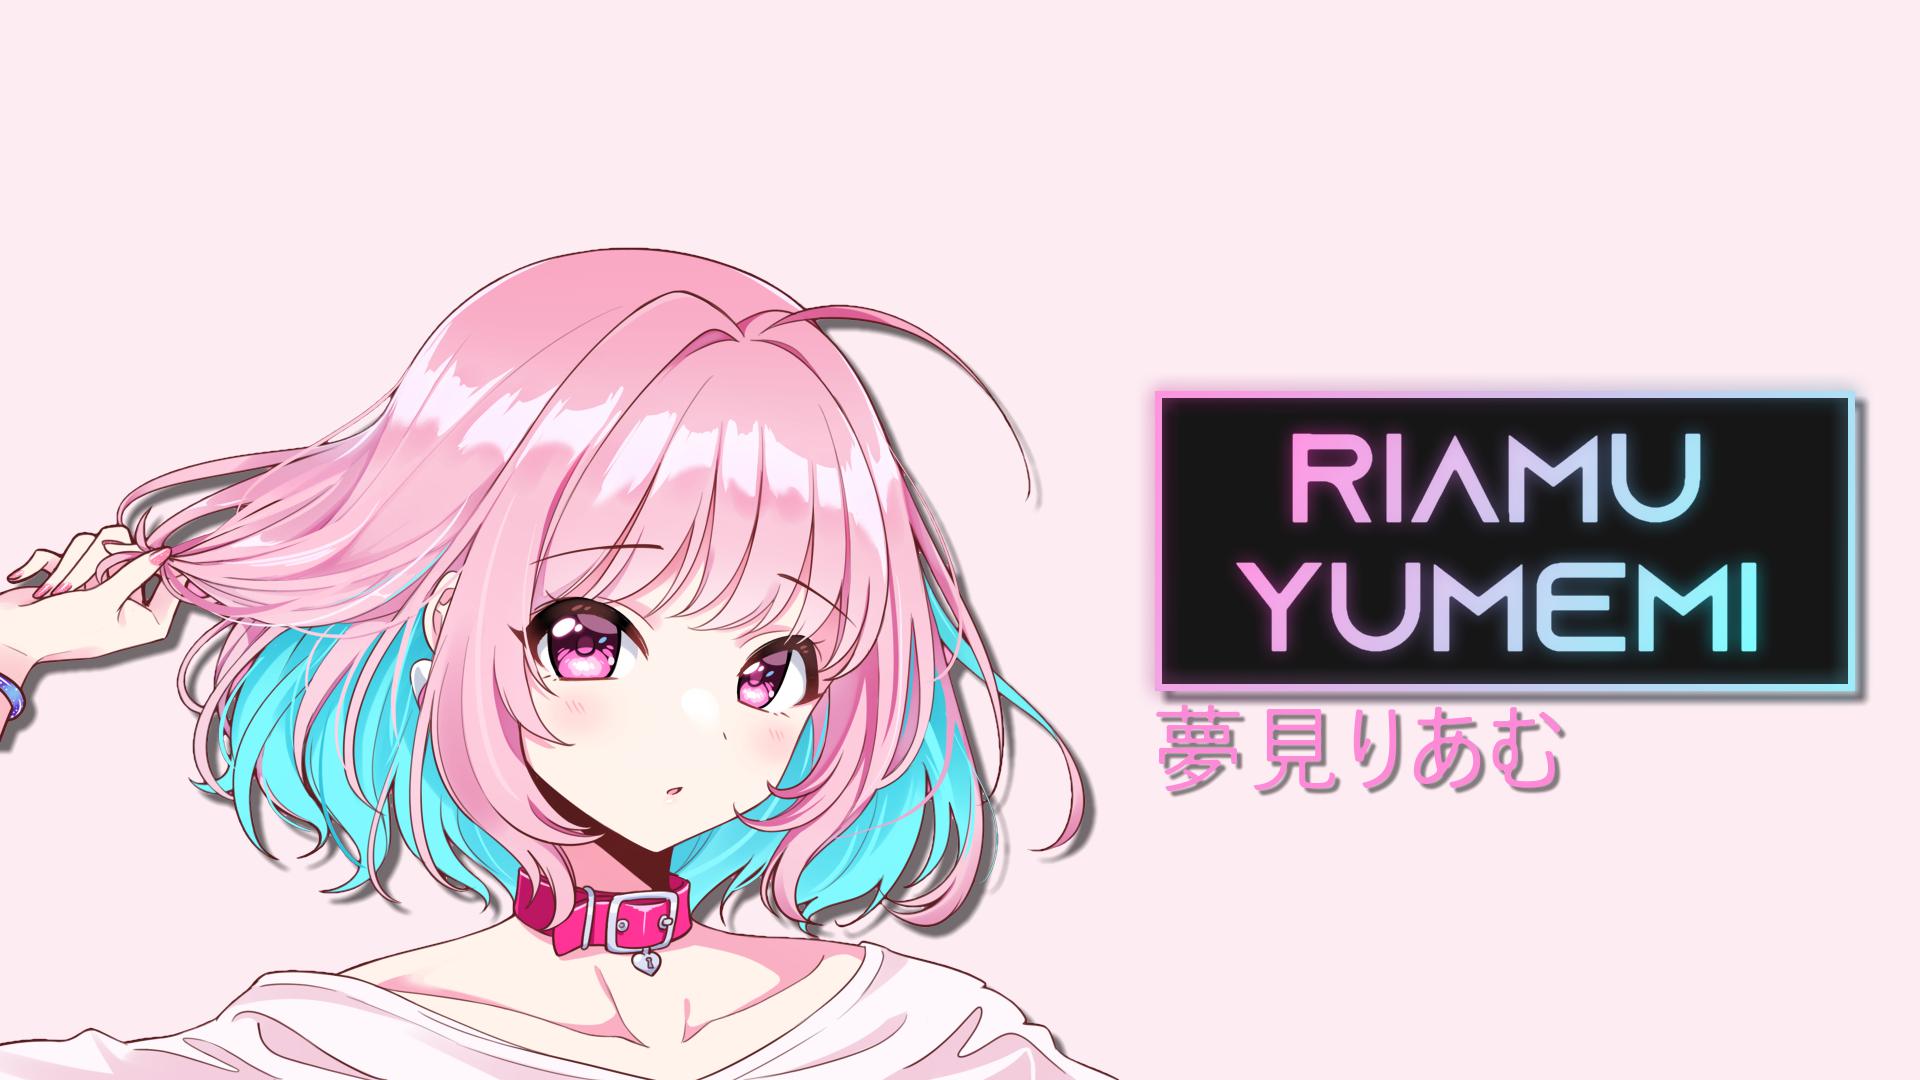 Riamu Yumemi Desktop Wallpaper (imgur link in comments)